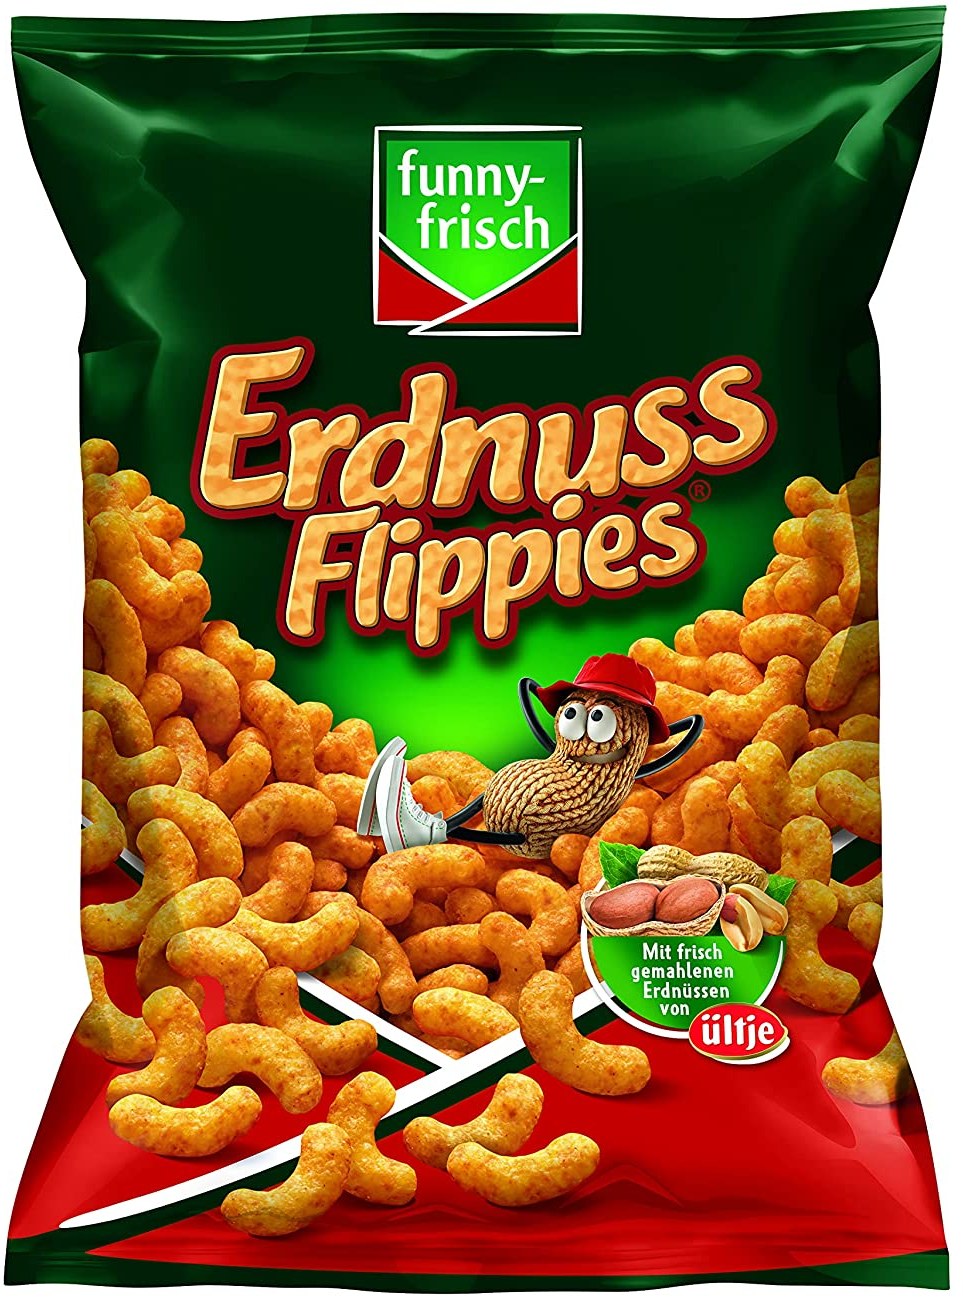 Funny Erdnuss Flippies 200g